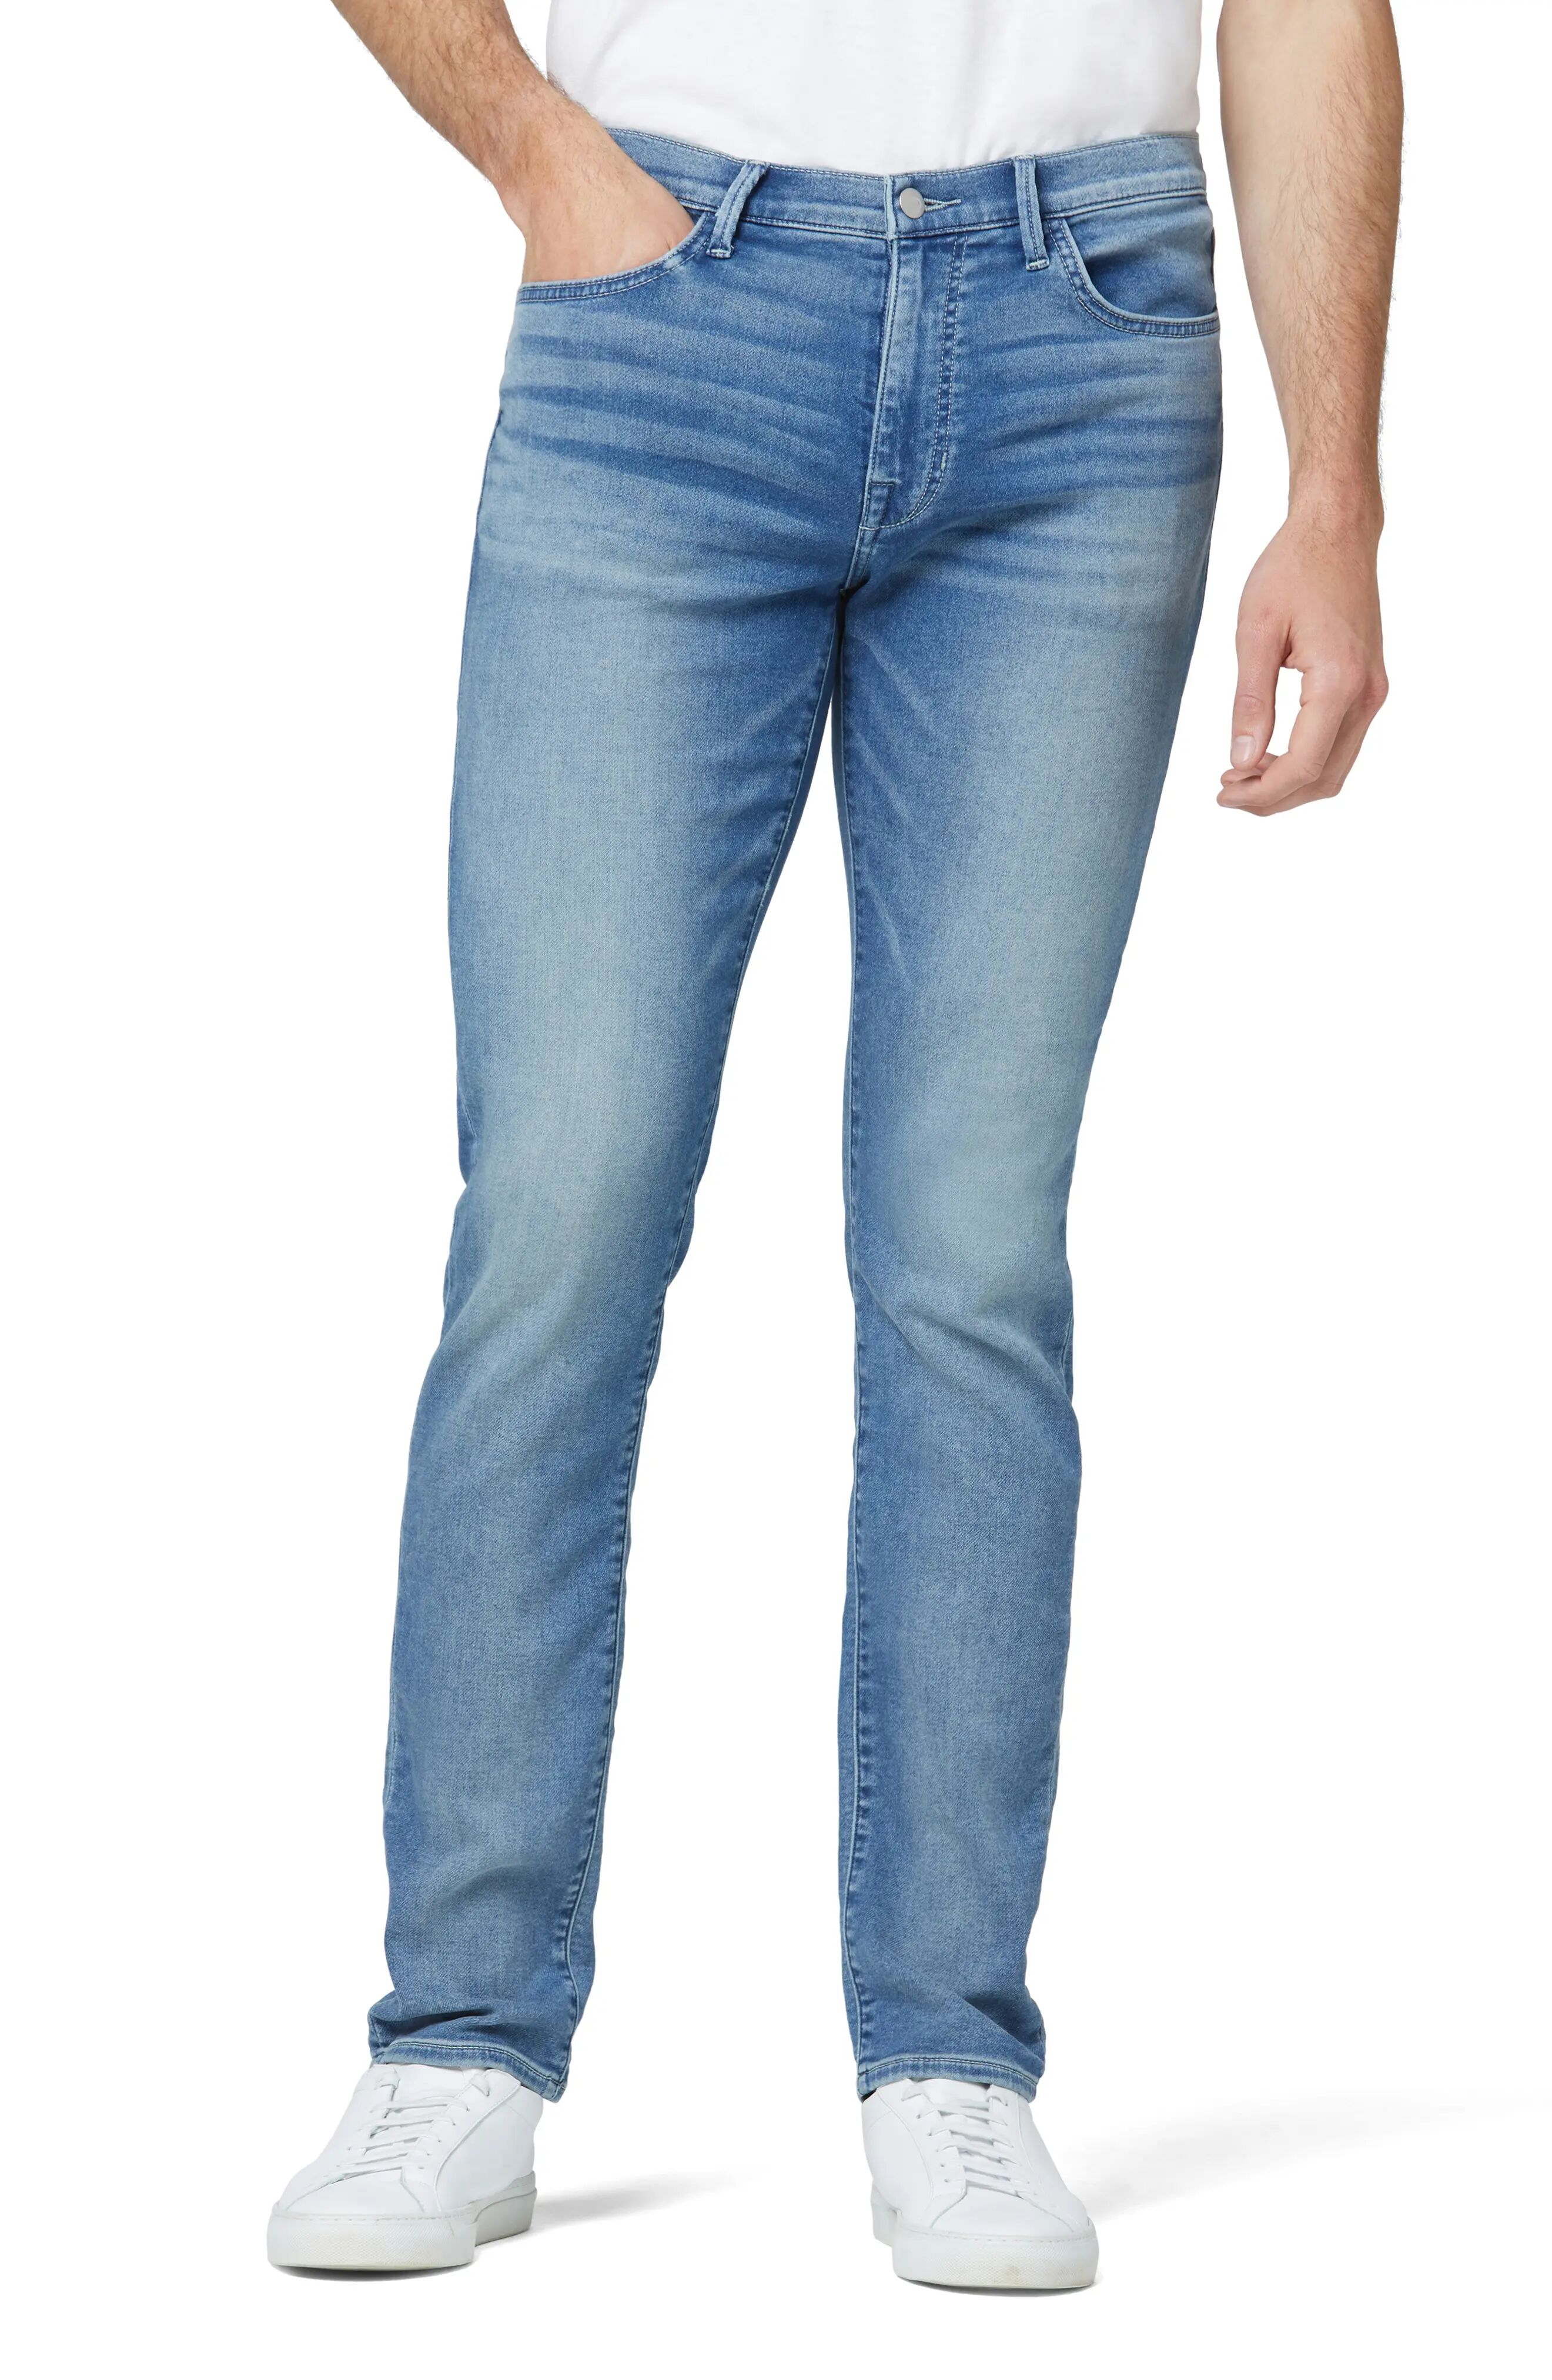 Joe's The Asher Slim Fit Jeans in Hamer at Nordstrom Rack, Size 30